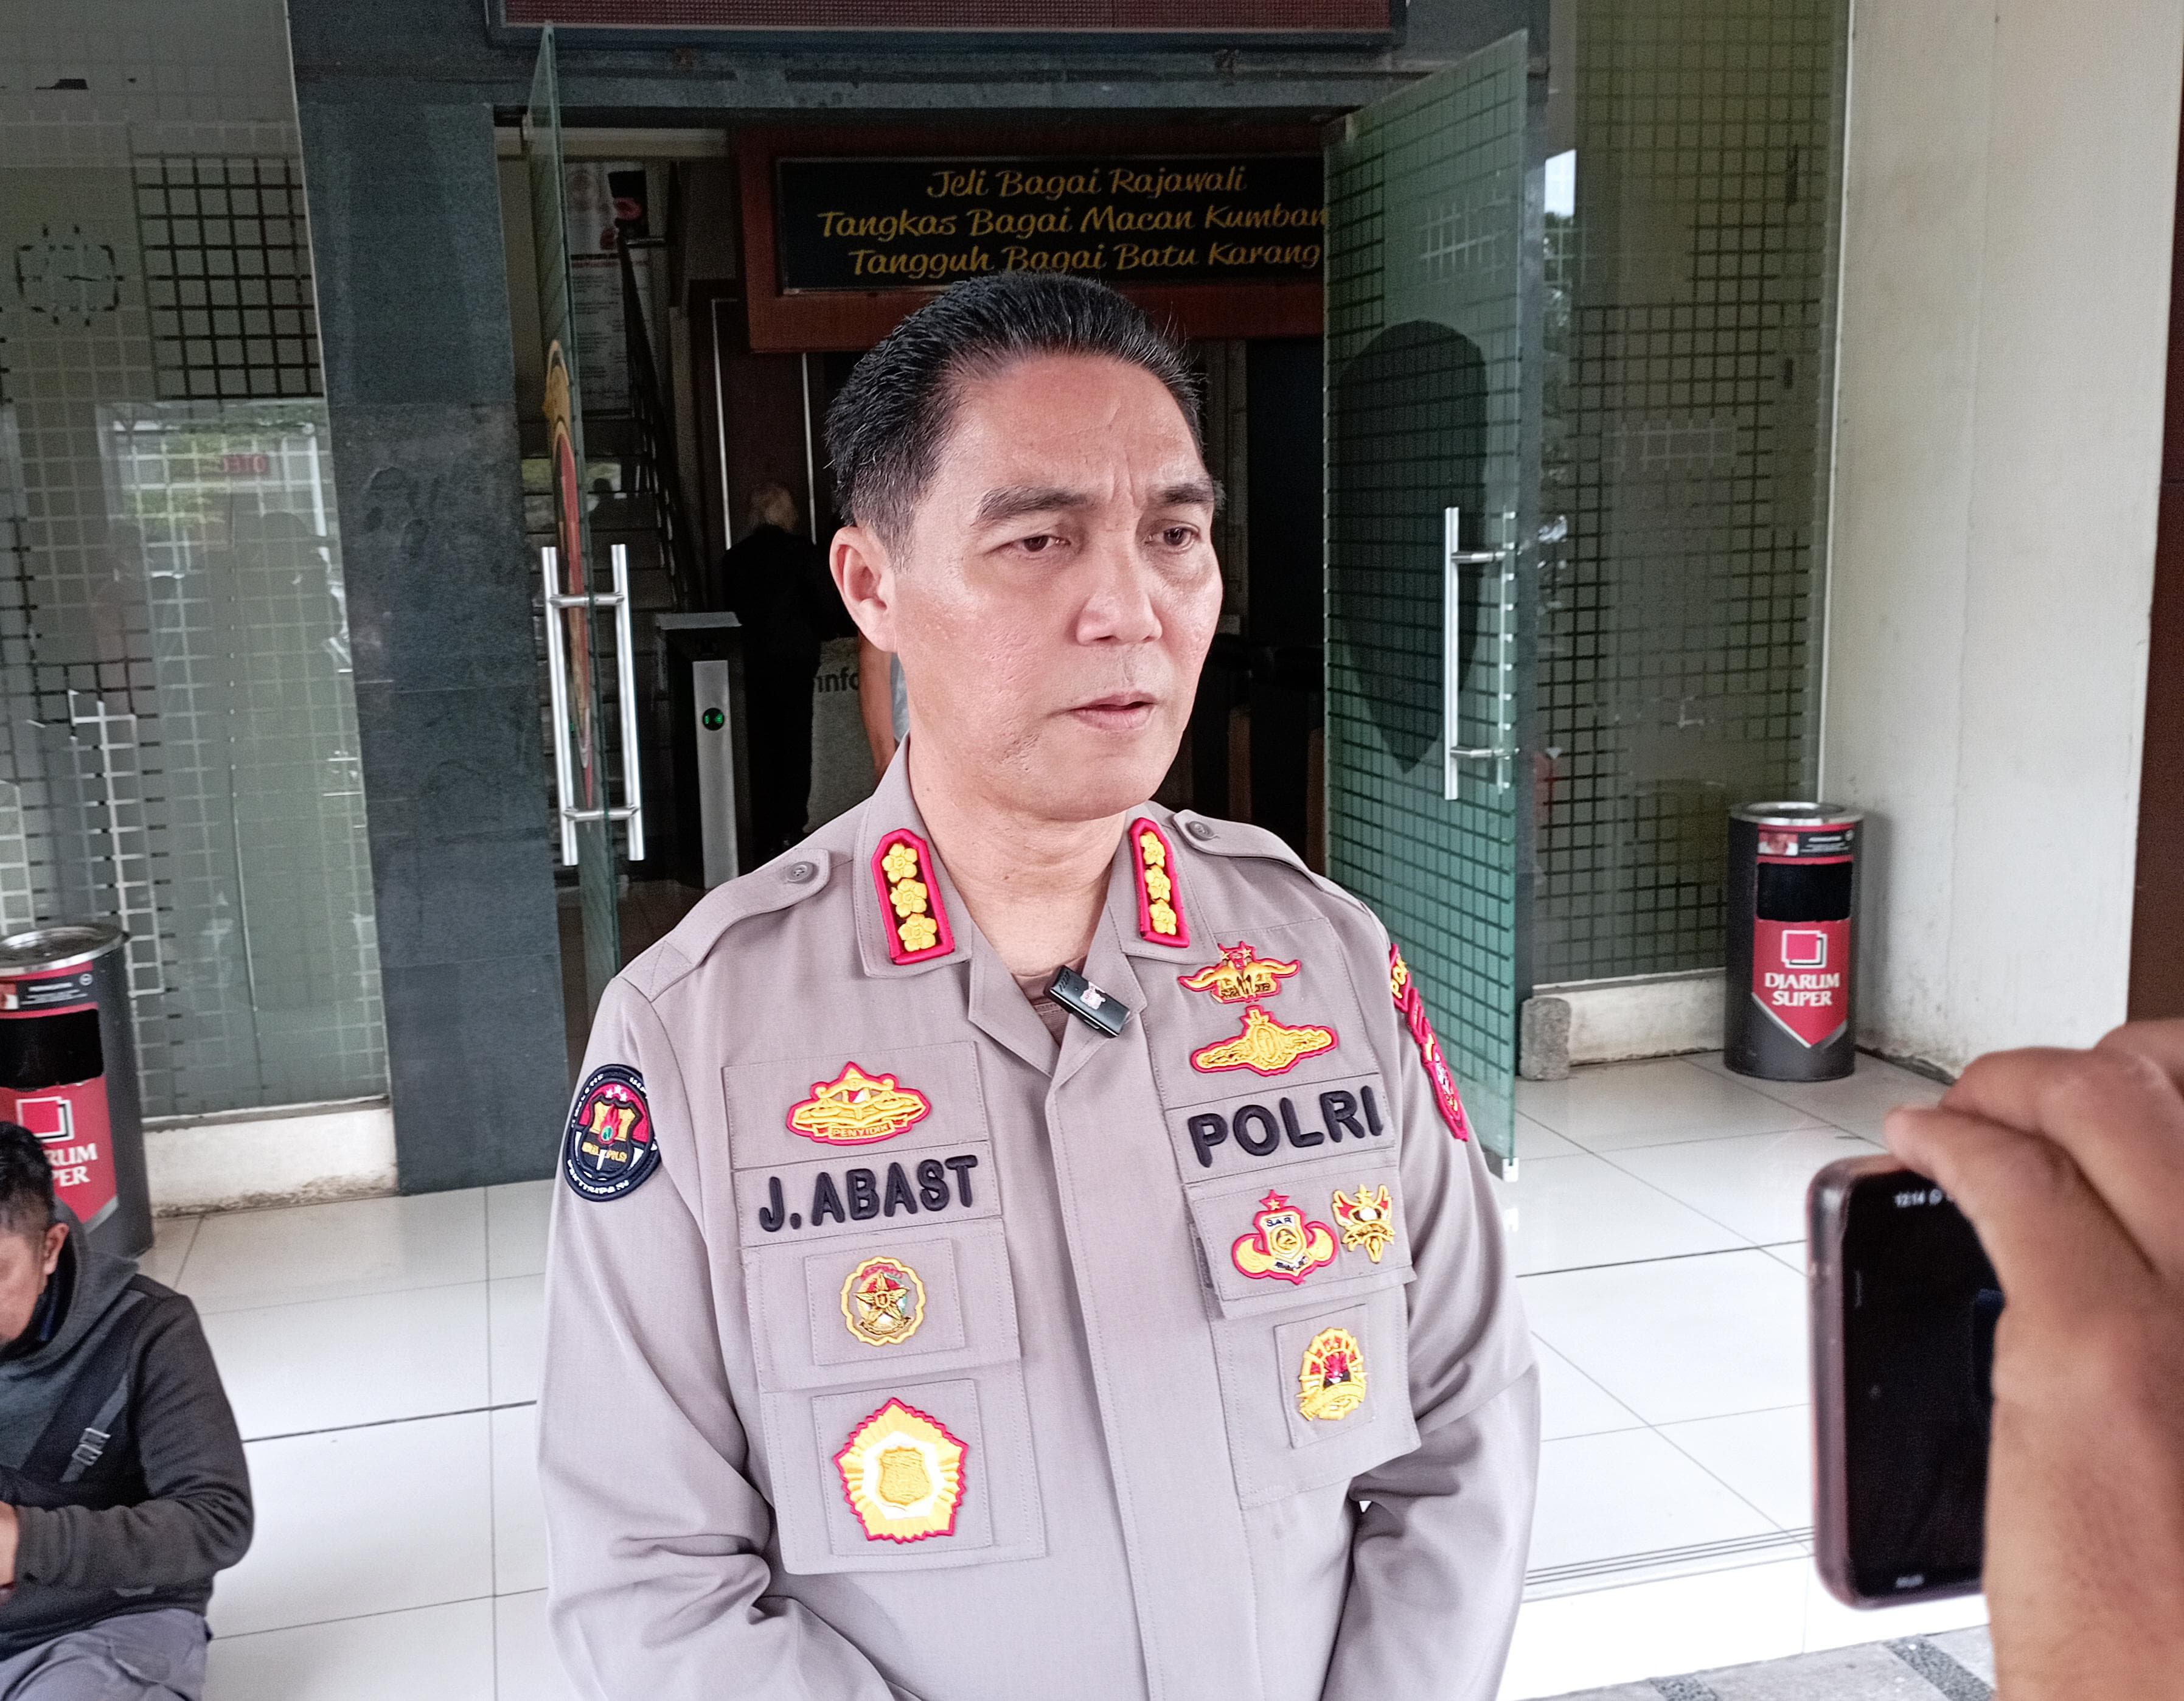 Satu DPO Kasus Pembunuhan Vina Ditangkap, Pihak Kepolisian Ungkap Pelaku Merupakan Buruh Bangunan di Bandung